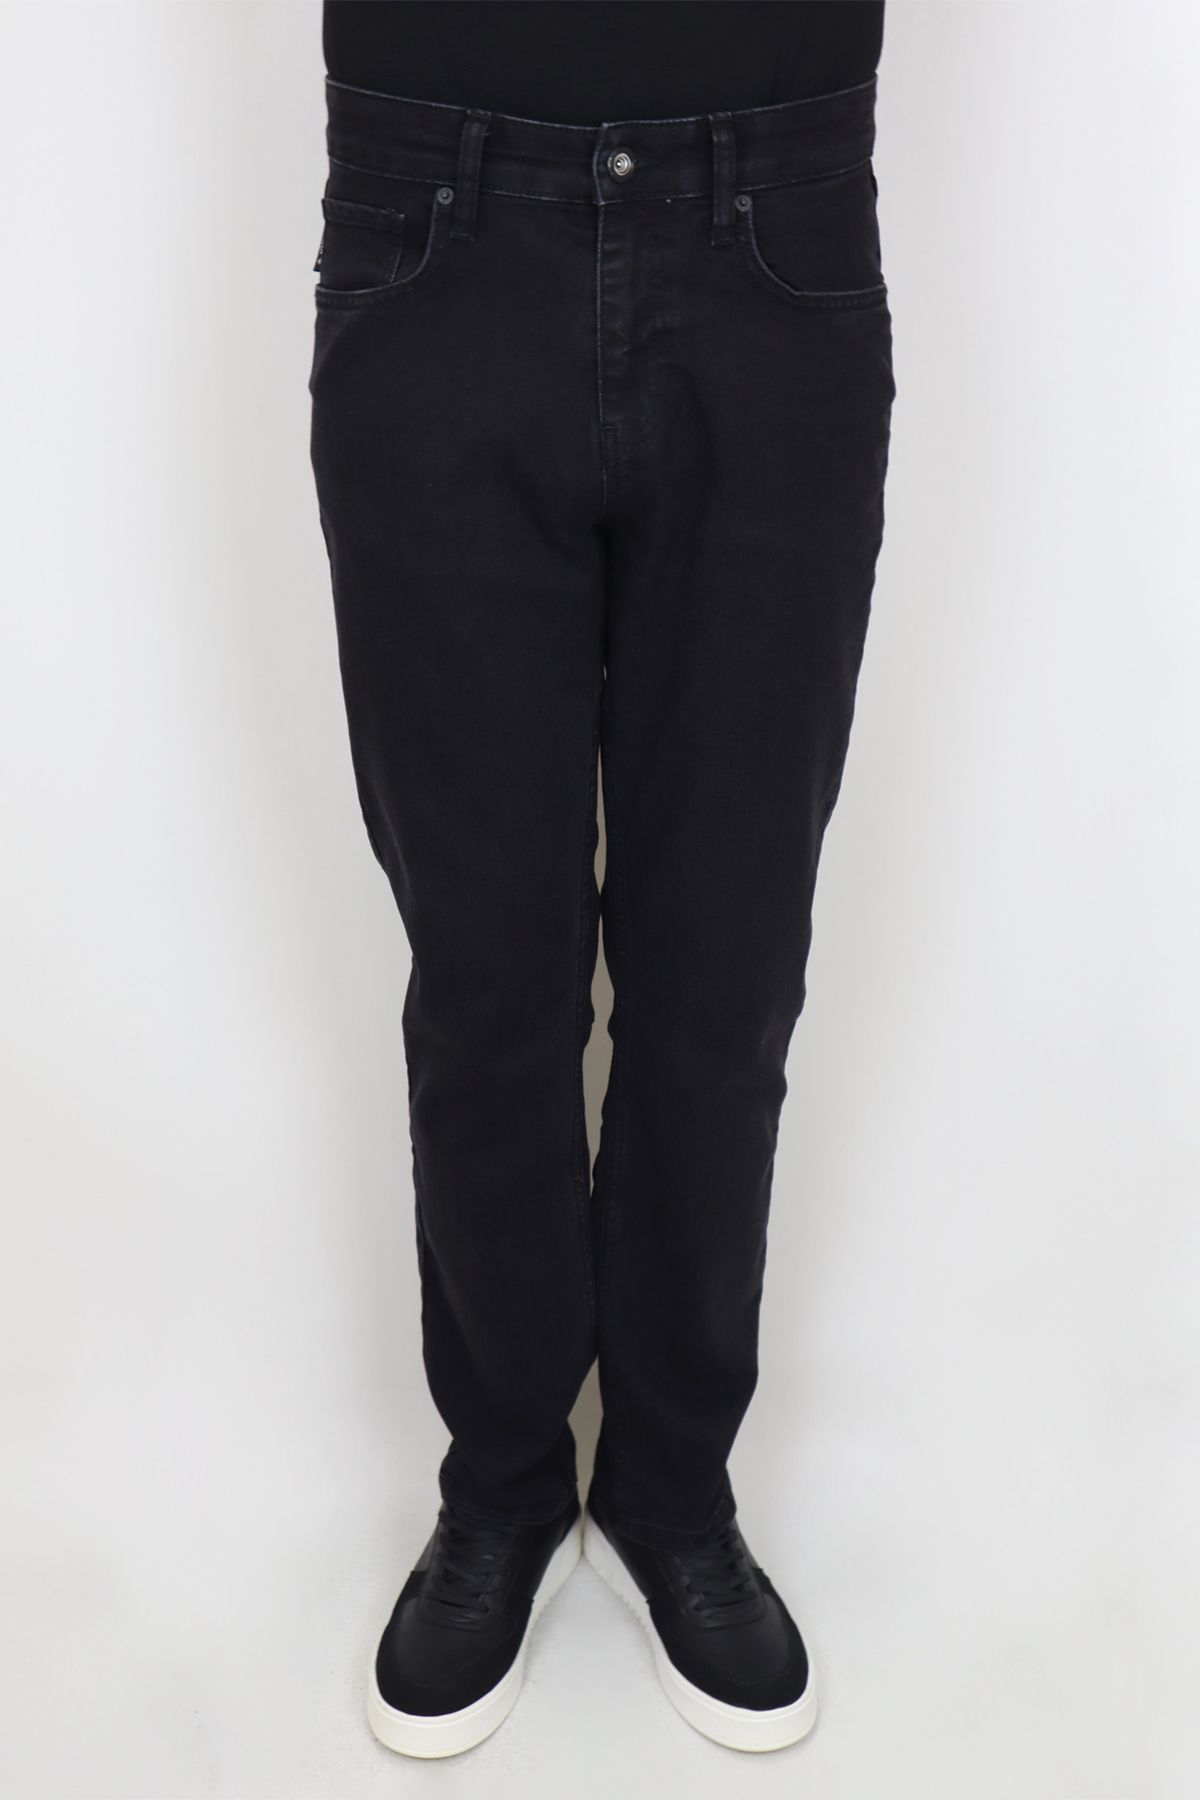 Rodi Jeans Fistan Store Erkek Füme Yüksek Bel Rahat Kesim Boru Paça Jean Pantolon